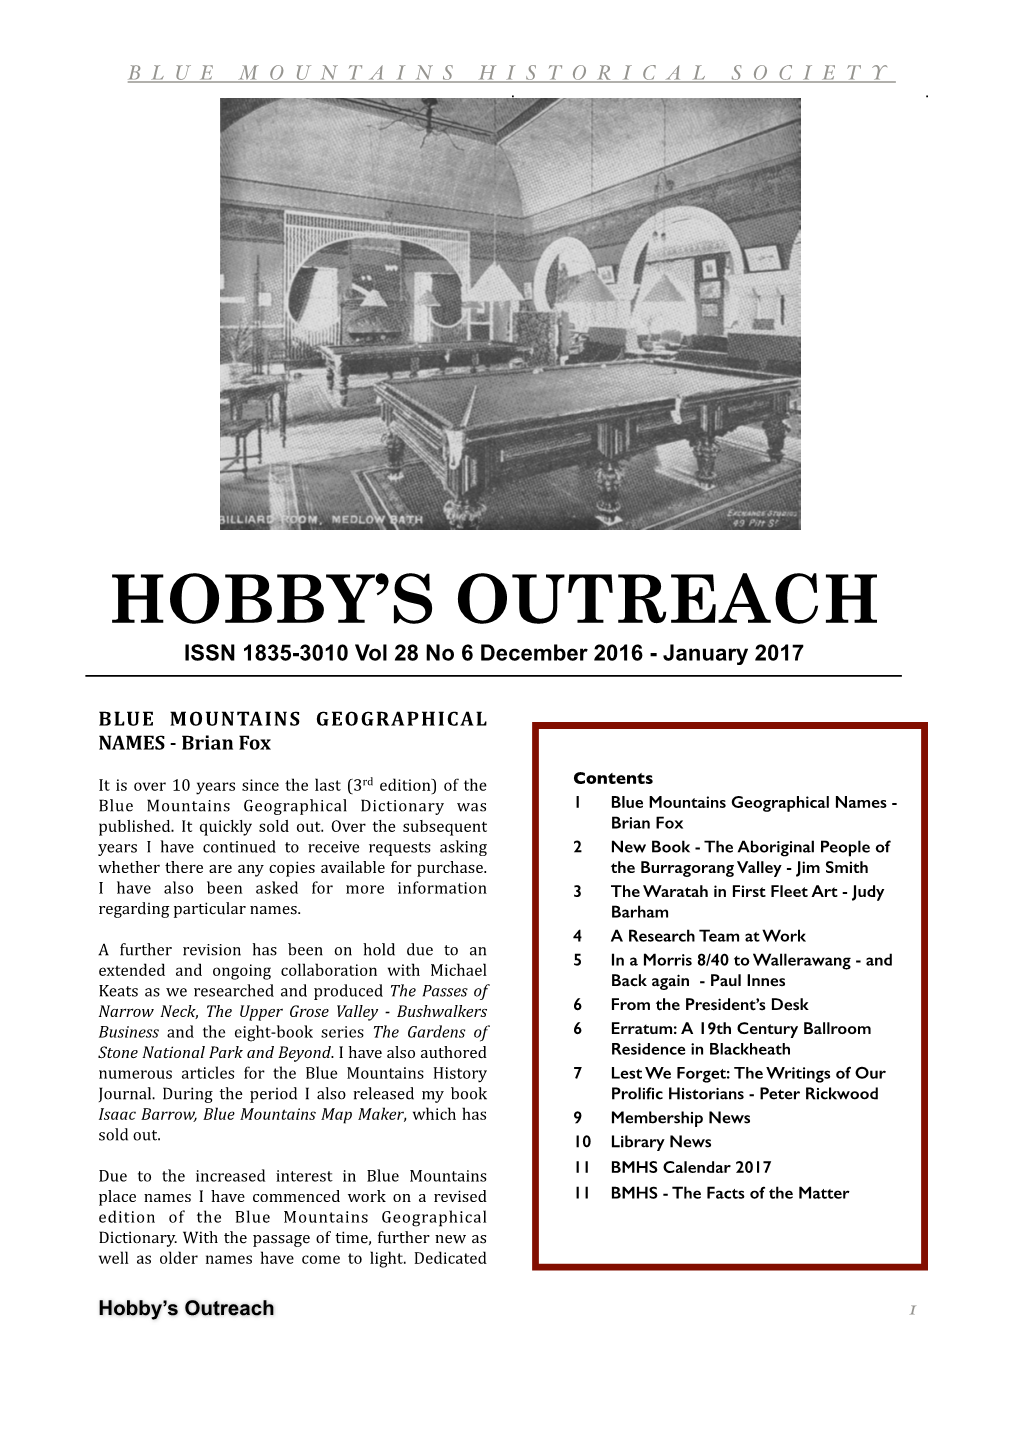 Hobby's Outreach, Vol 28 No 6